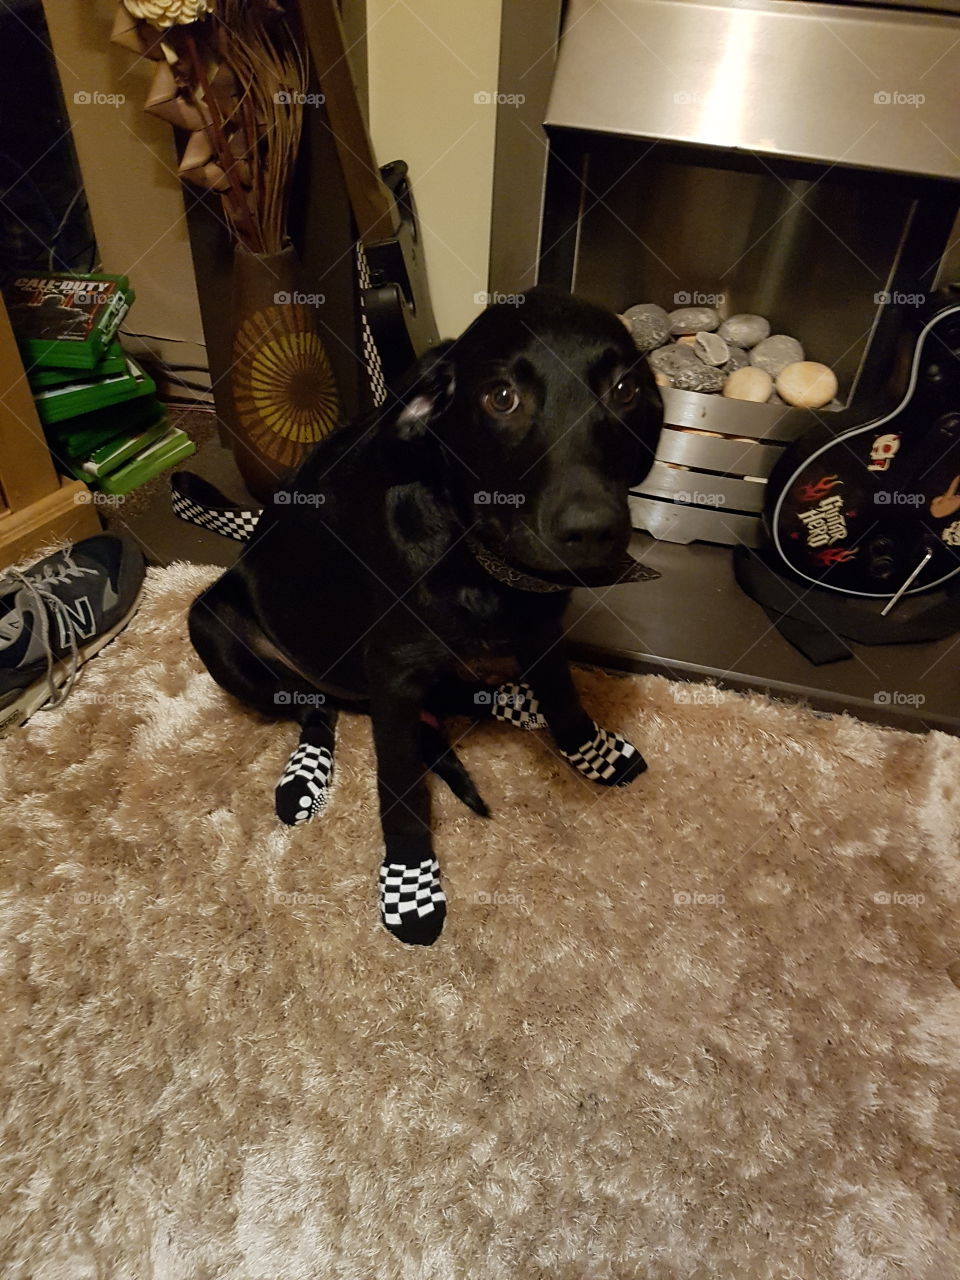 my dog loves his new socks